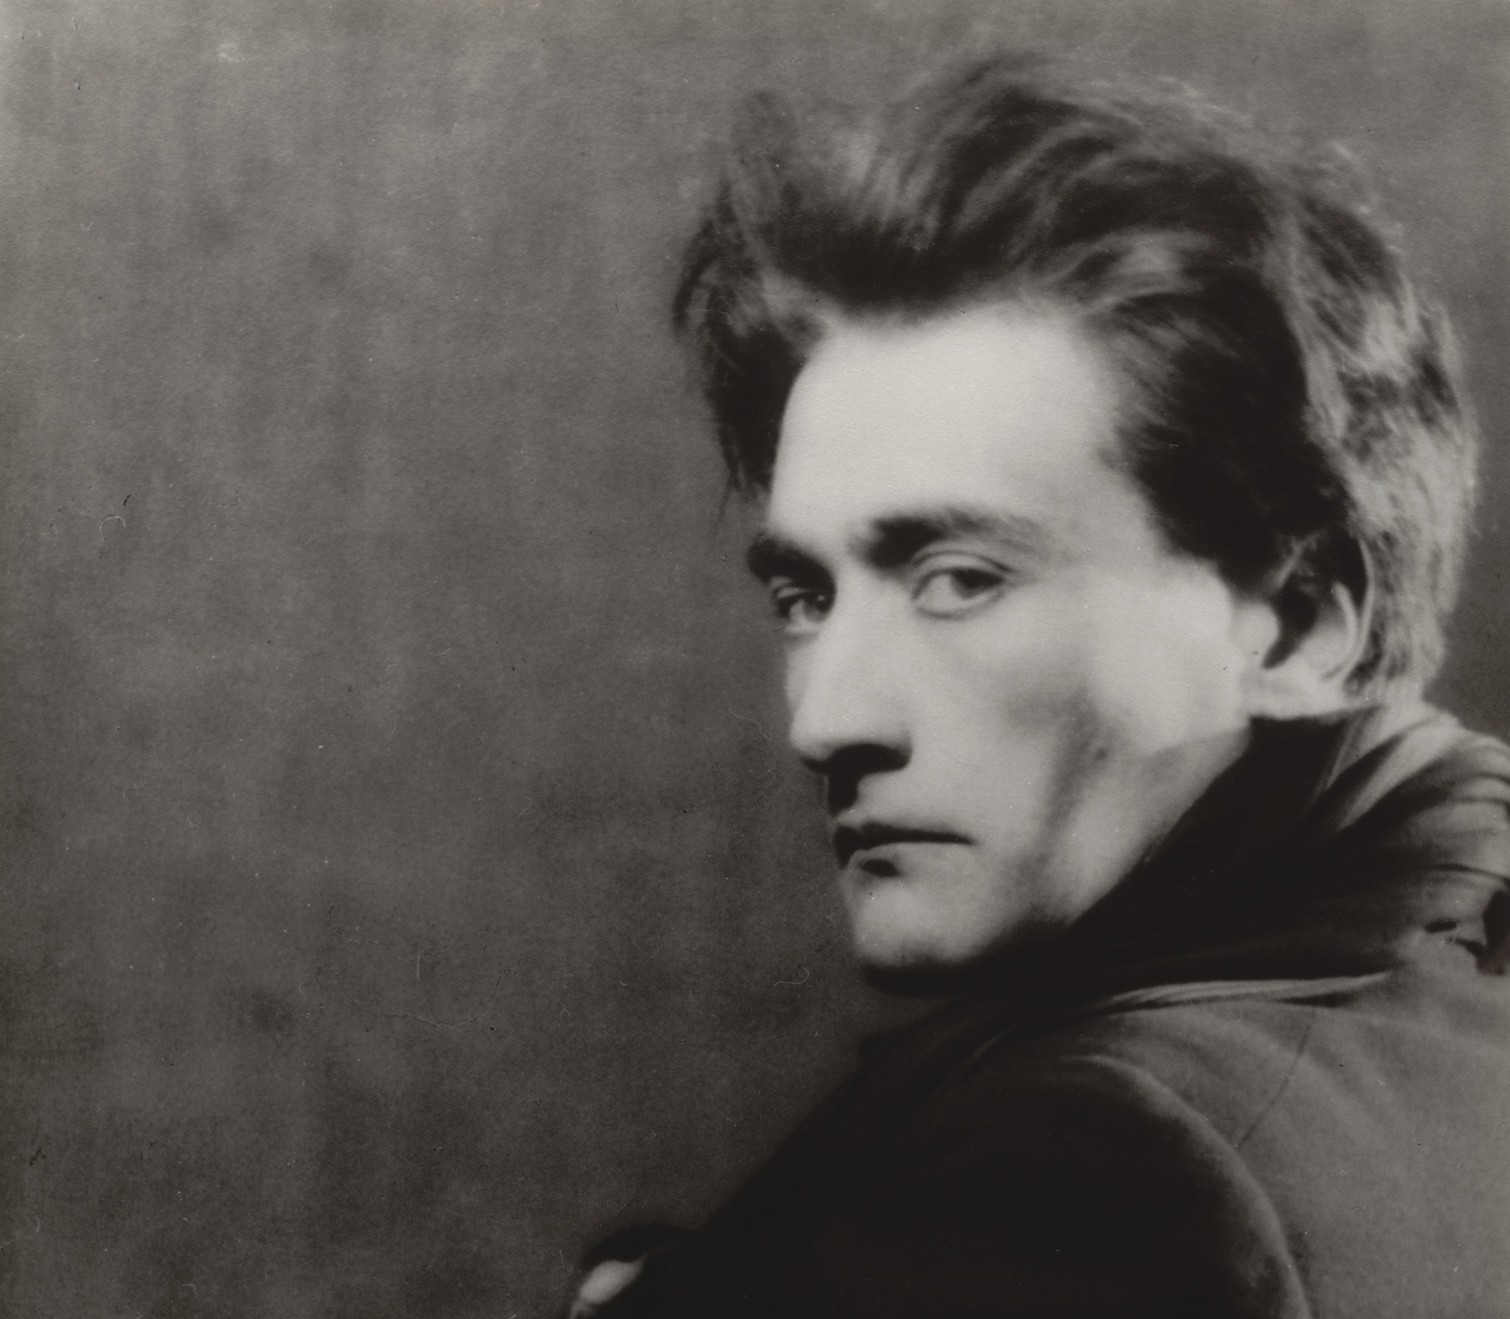 Portraits & spells: the mad genius of Antonin Artaud